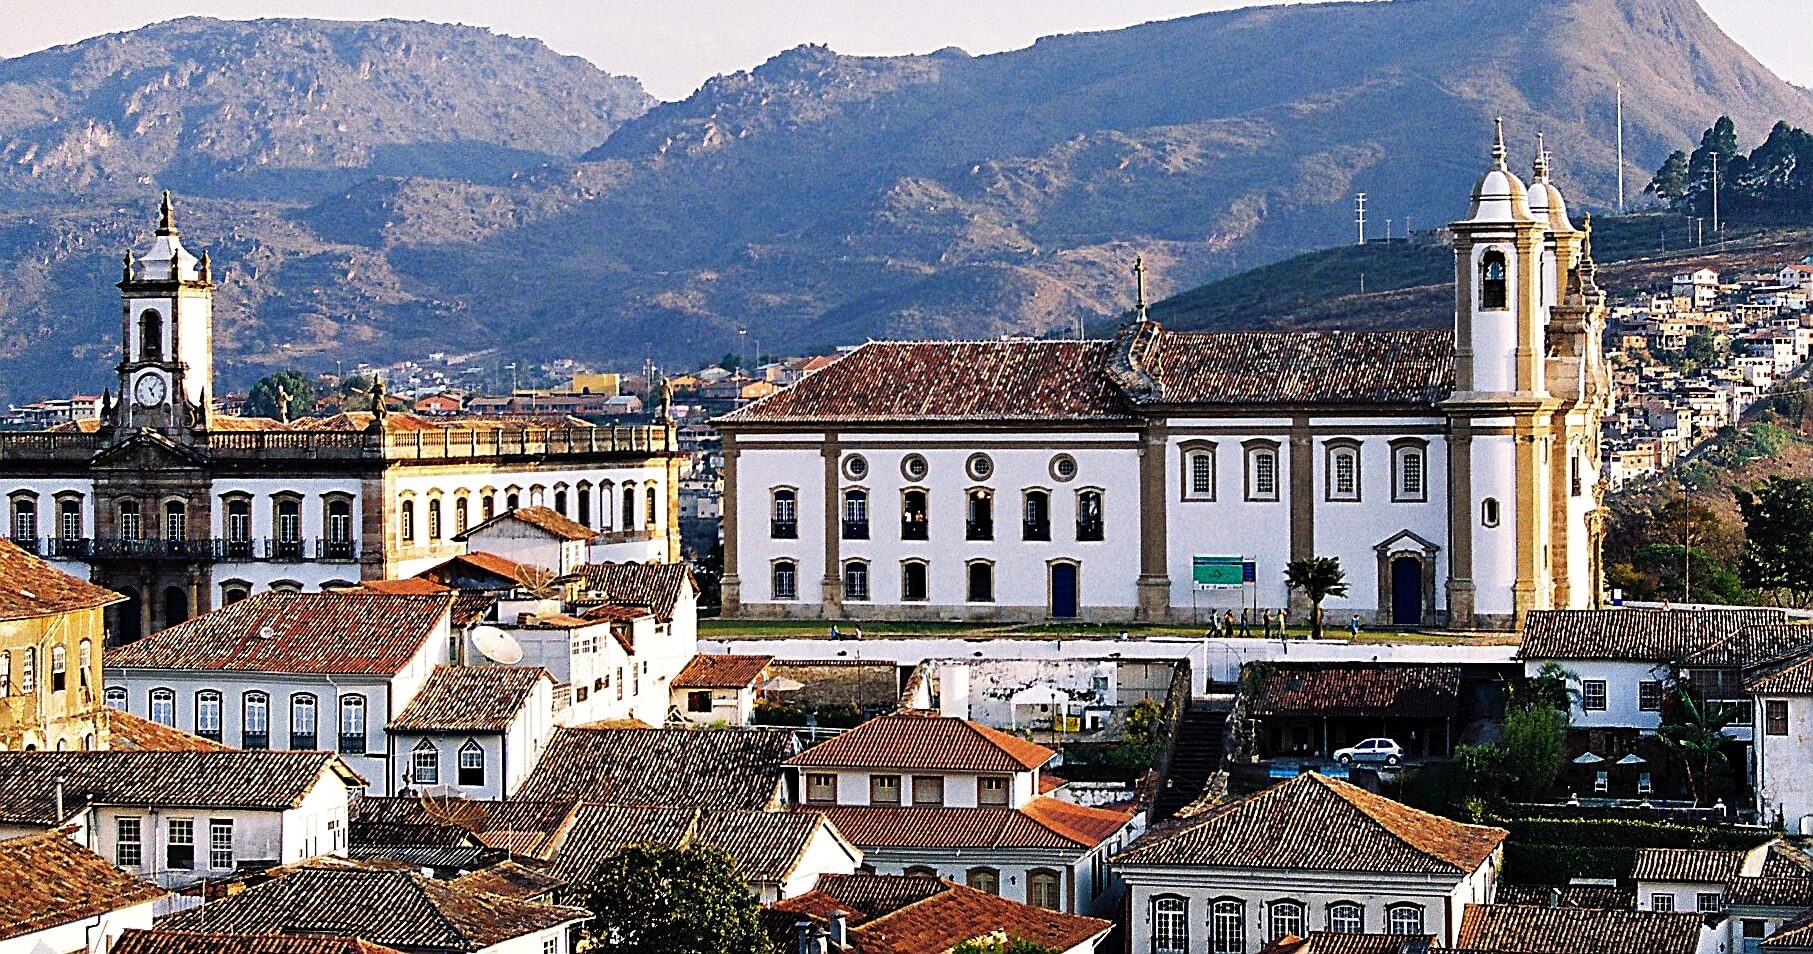 Centro histórico de Ouro Preto